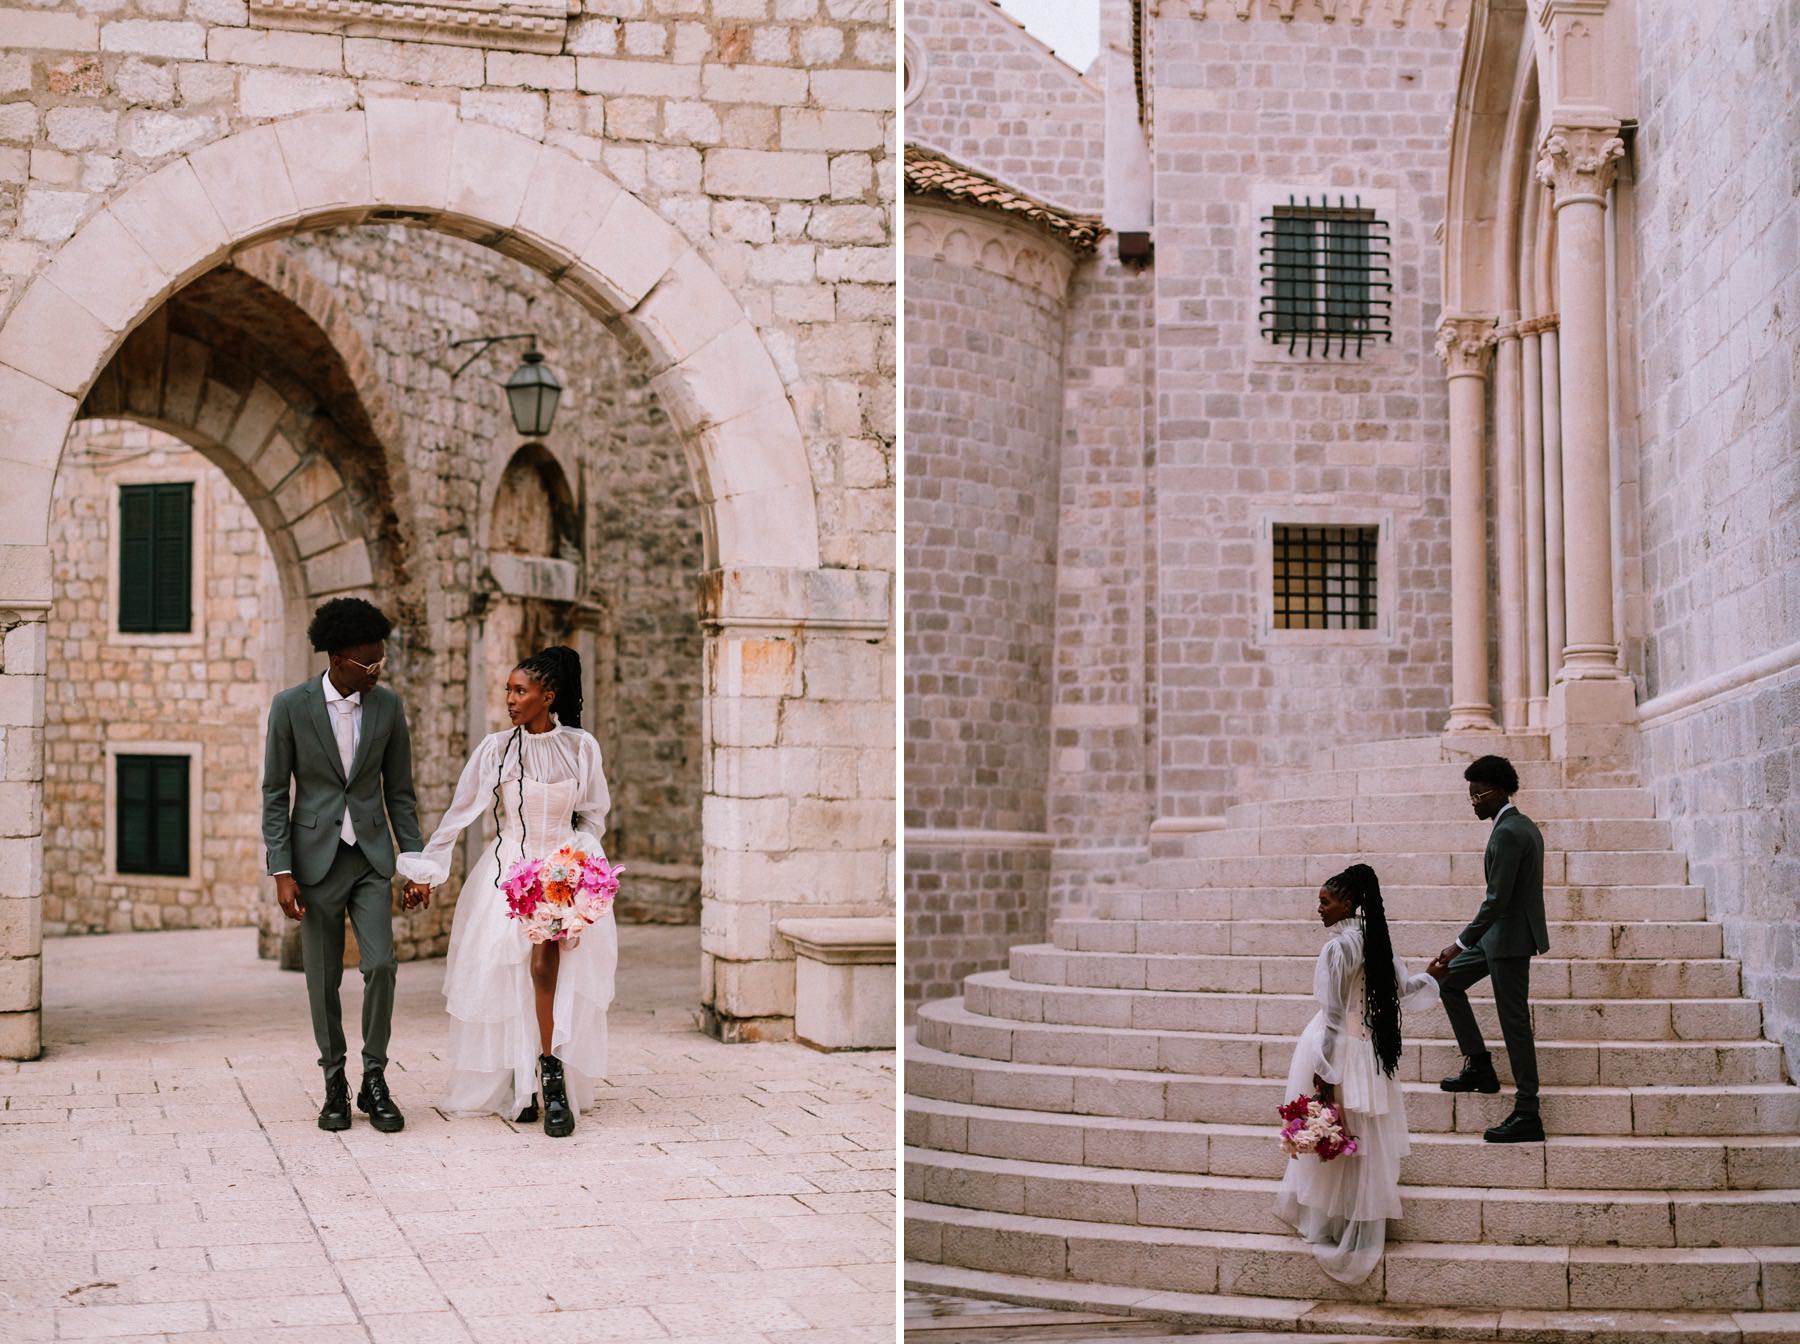 Dubrovnik old town wedding photographer